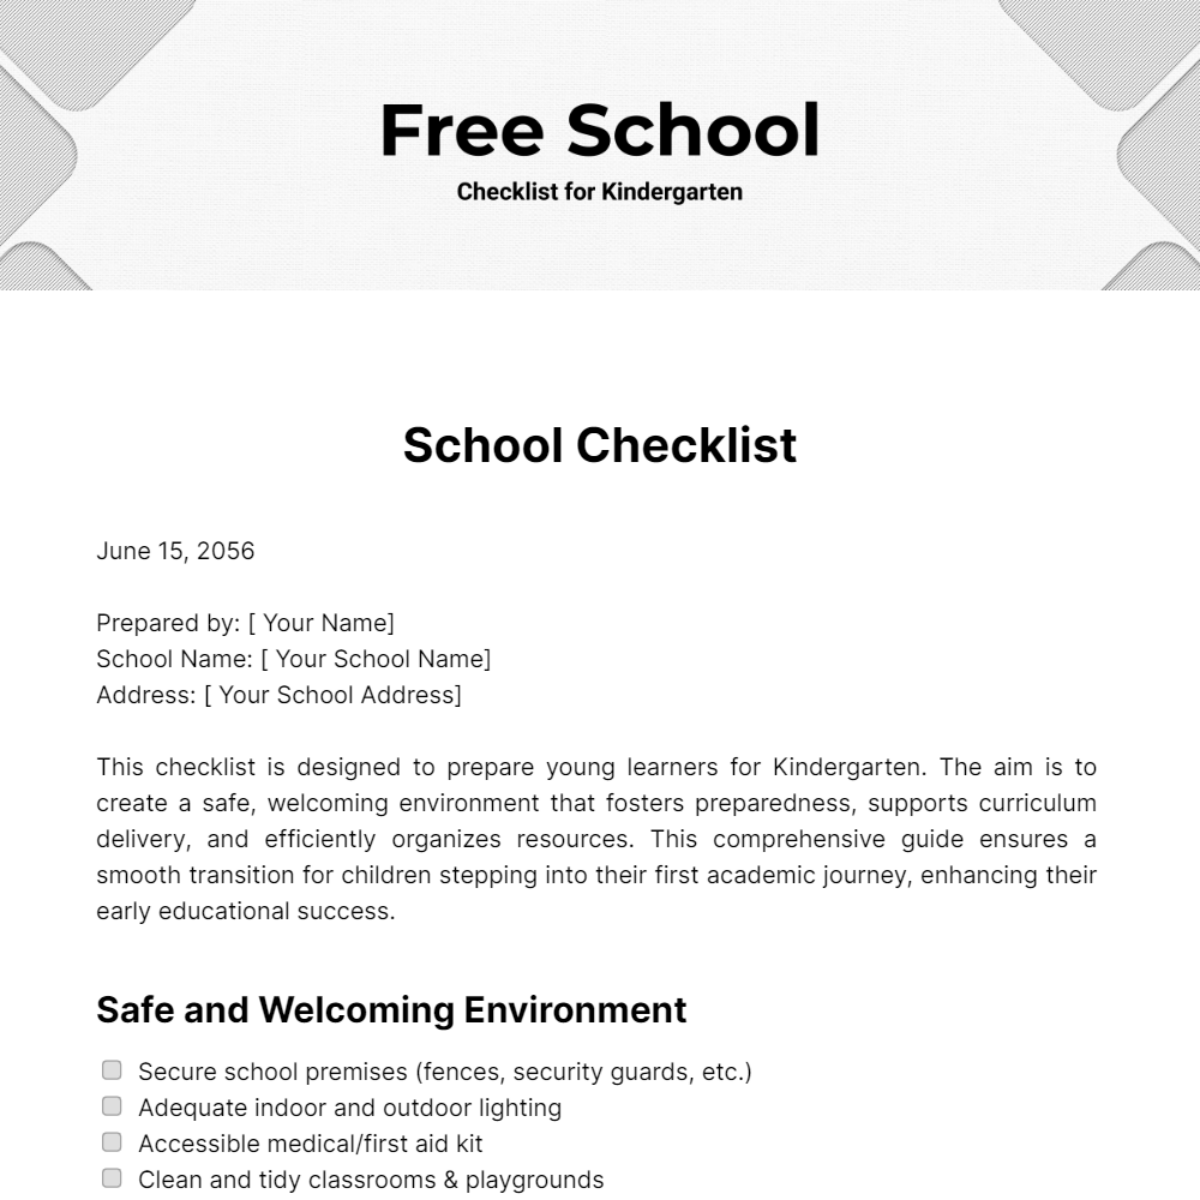 Free School Checklist for Kindergarten Template